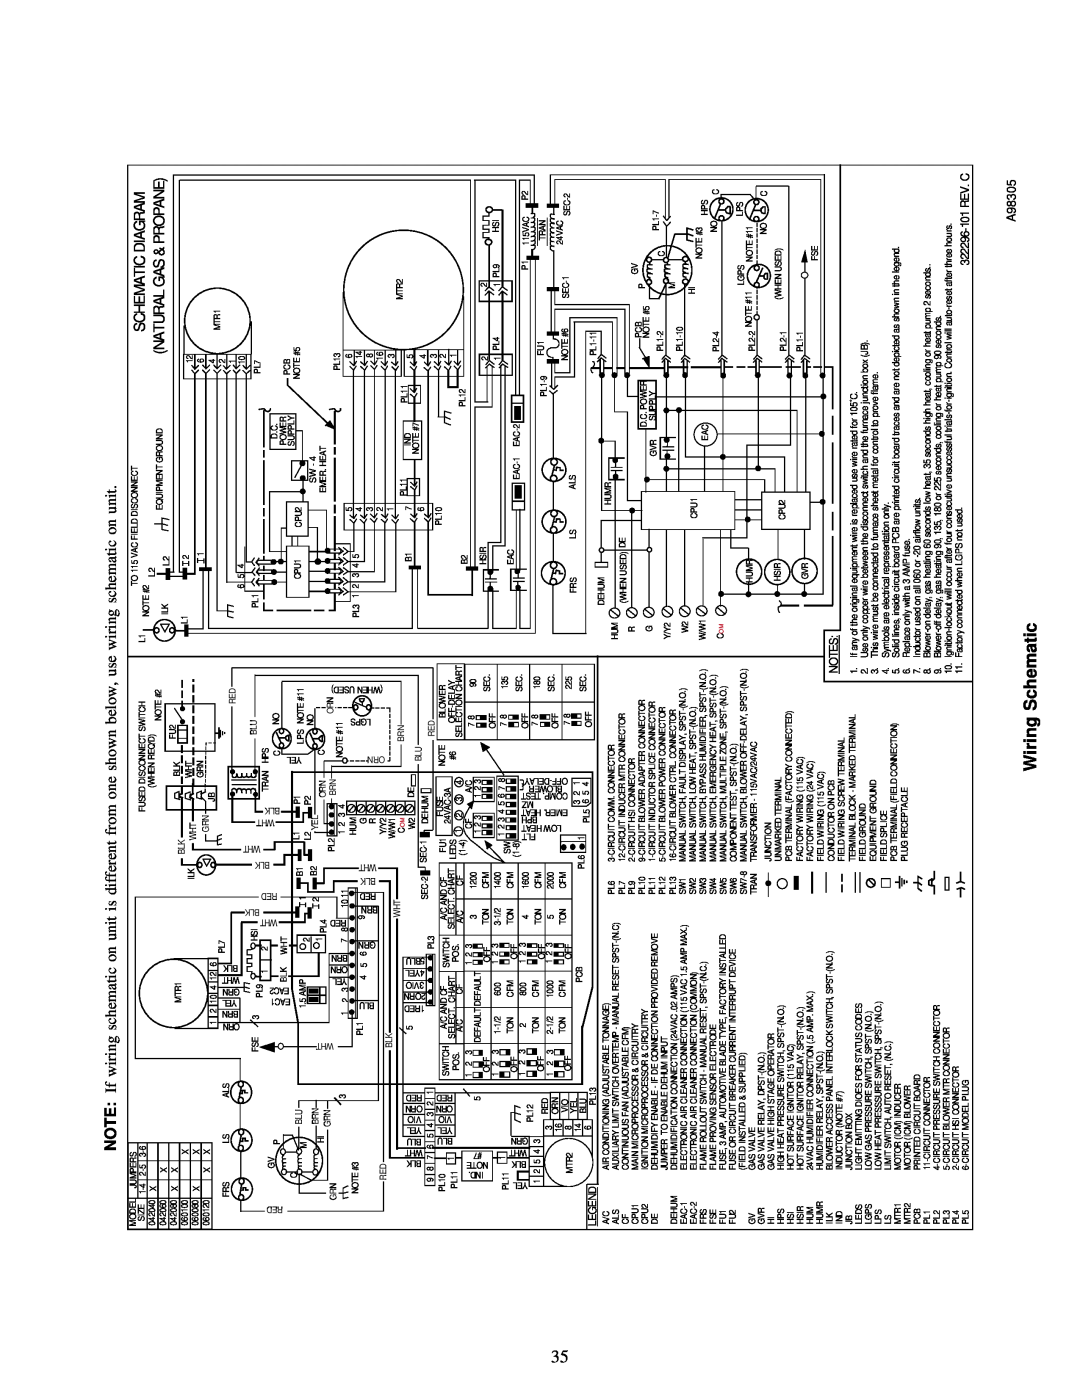 Carrier 58MVP instruction manual Wiring Schematic, Schematic Diagram 